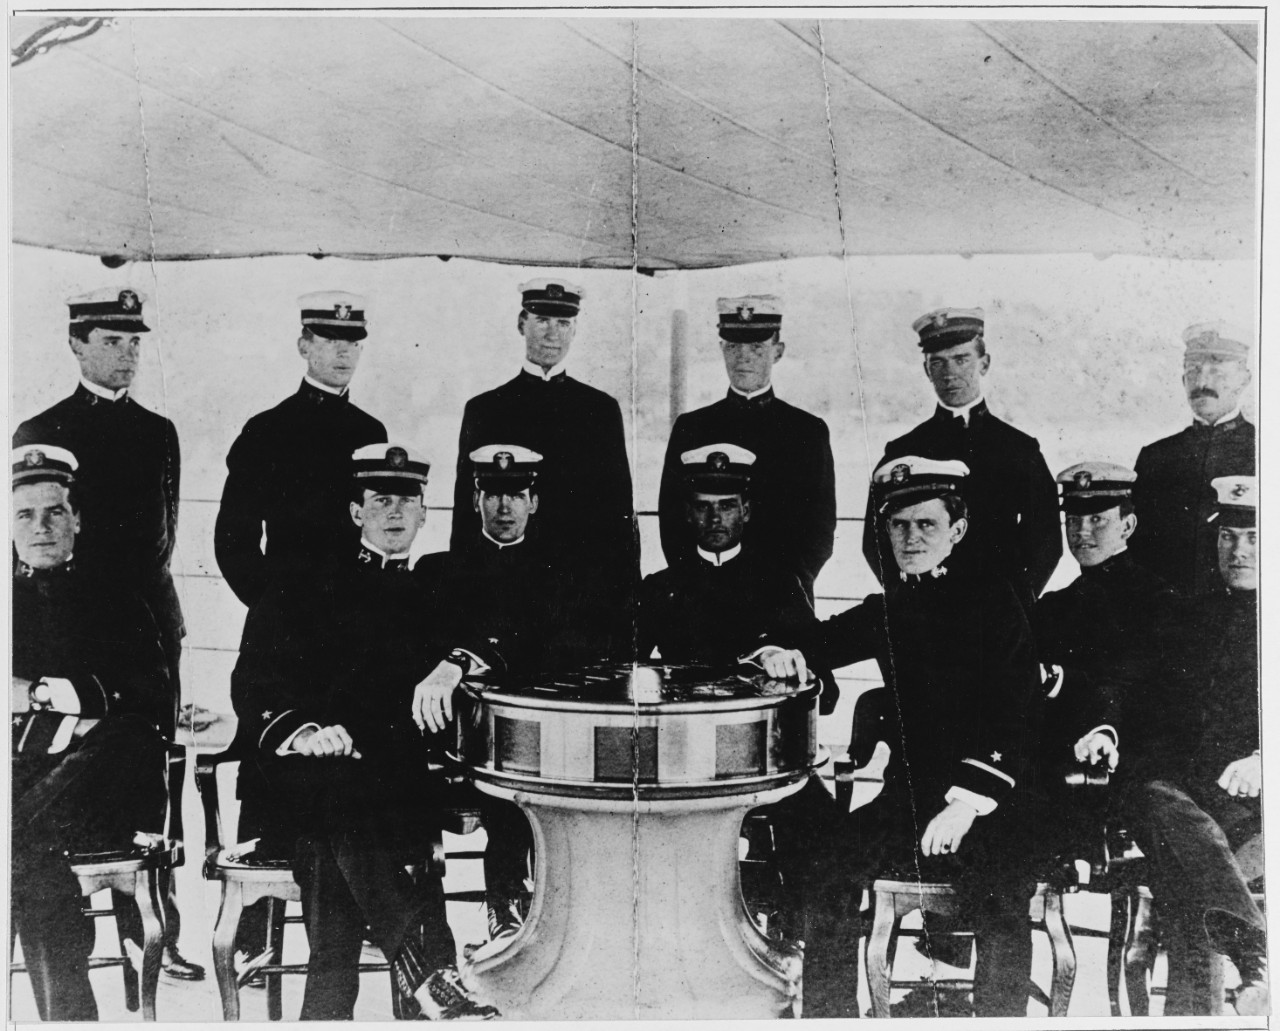 On board USS ILLINOIS (BB-7) in New Orleans, Louisiana in summer of 1902.